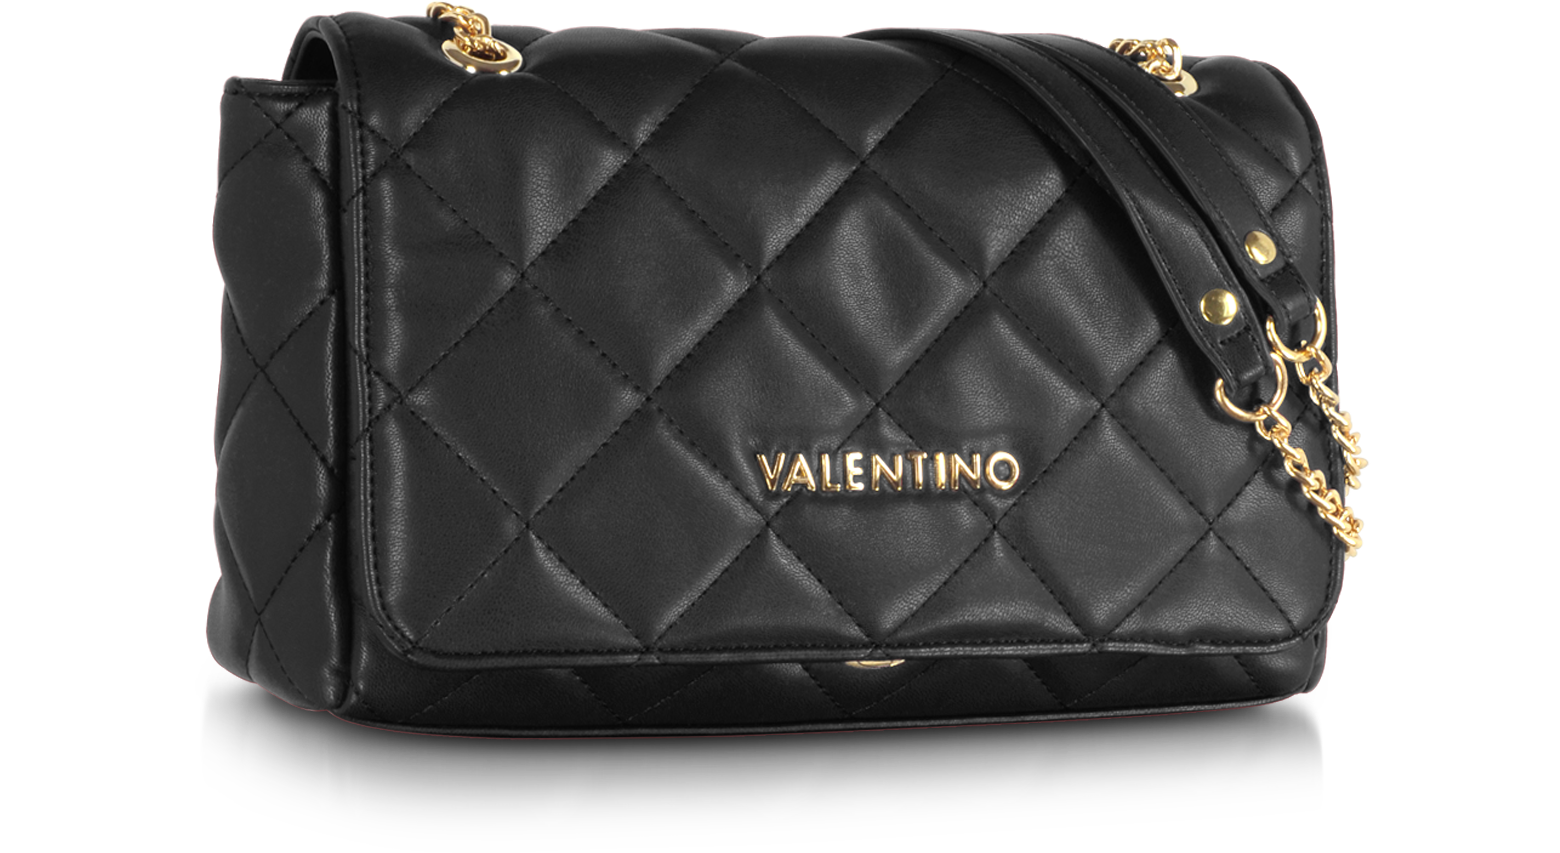 MARIO VALENTINO Beatriz D Leather Shoulder Bag Black $895